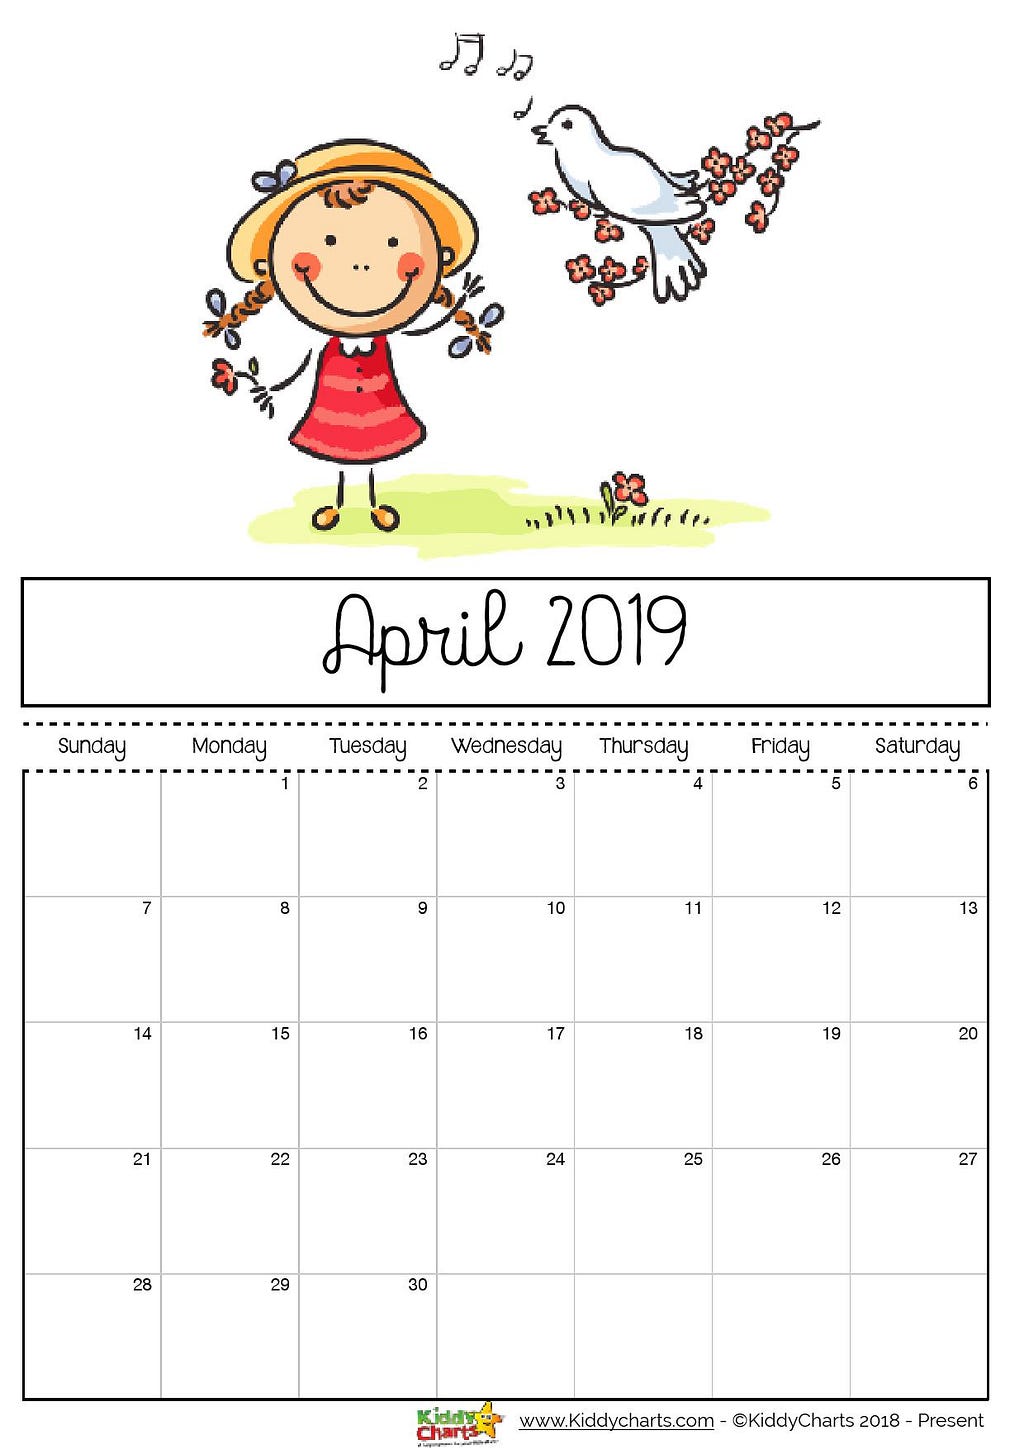 April printable 2019 calendar sheet - dove singing to a little girl. Cute isn't it? #Printable #2019calendar #kidsprintables